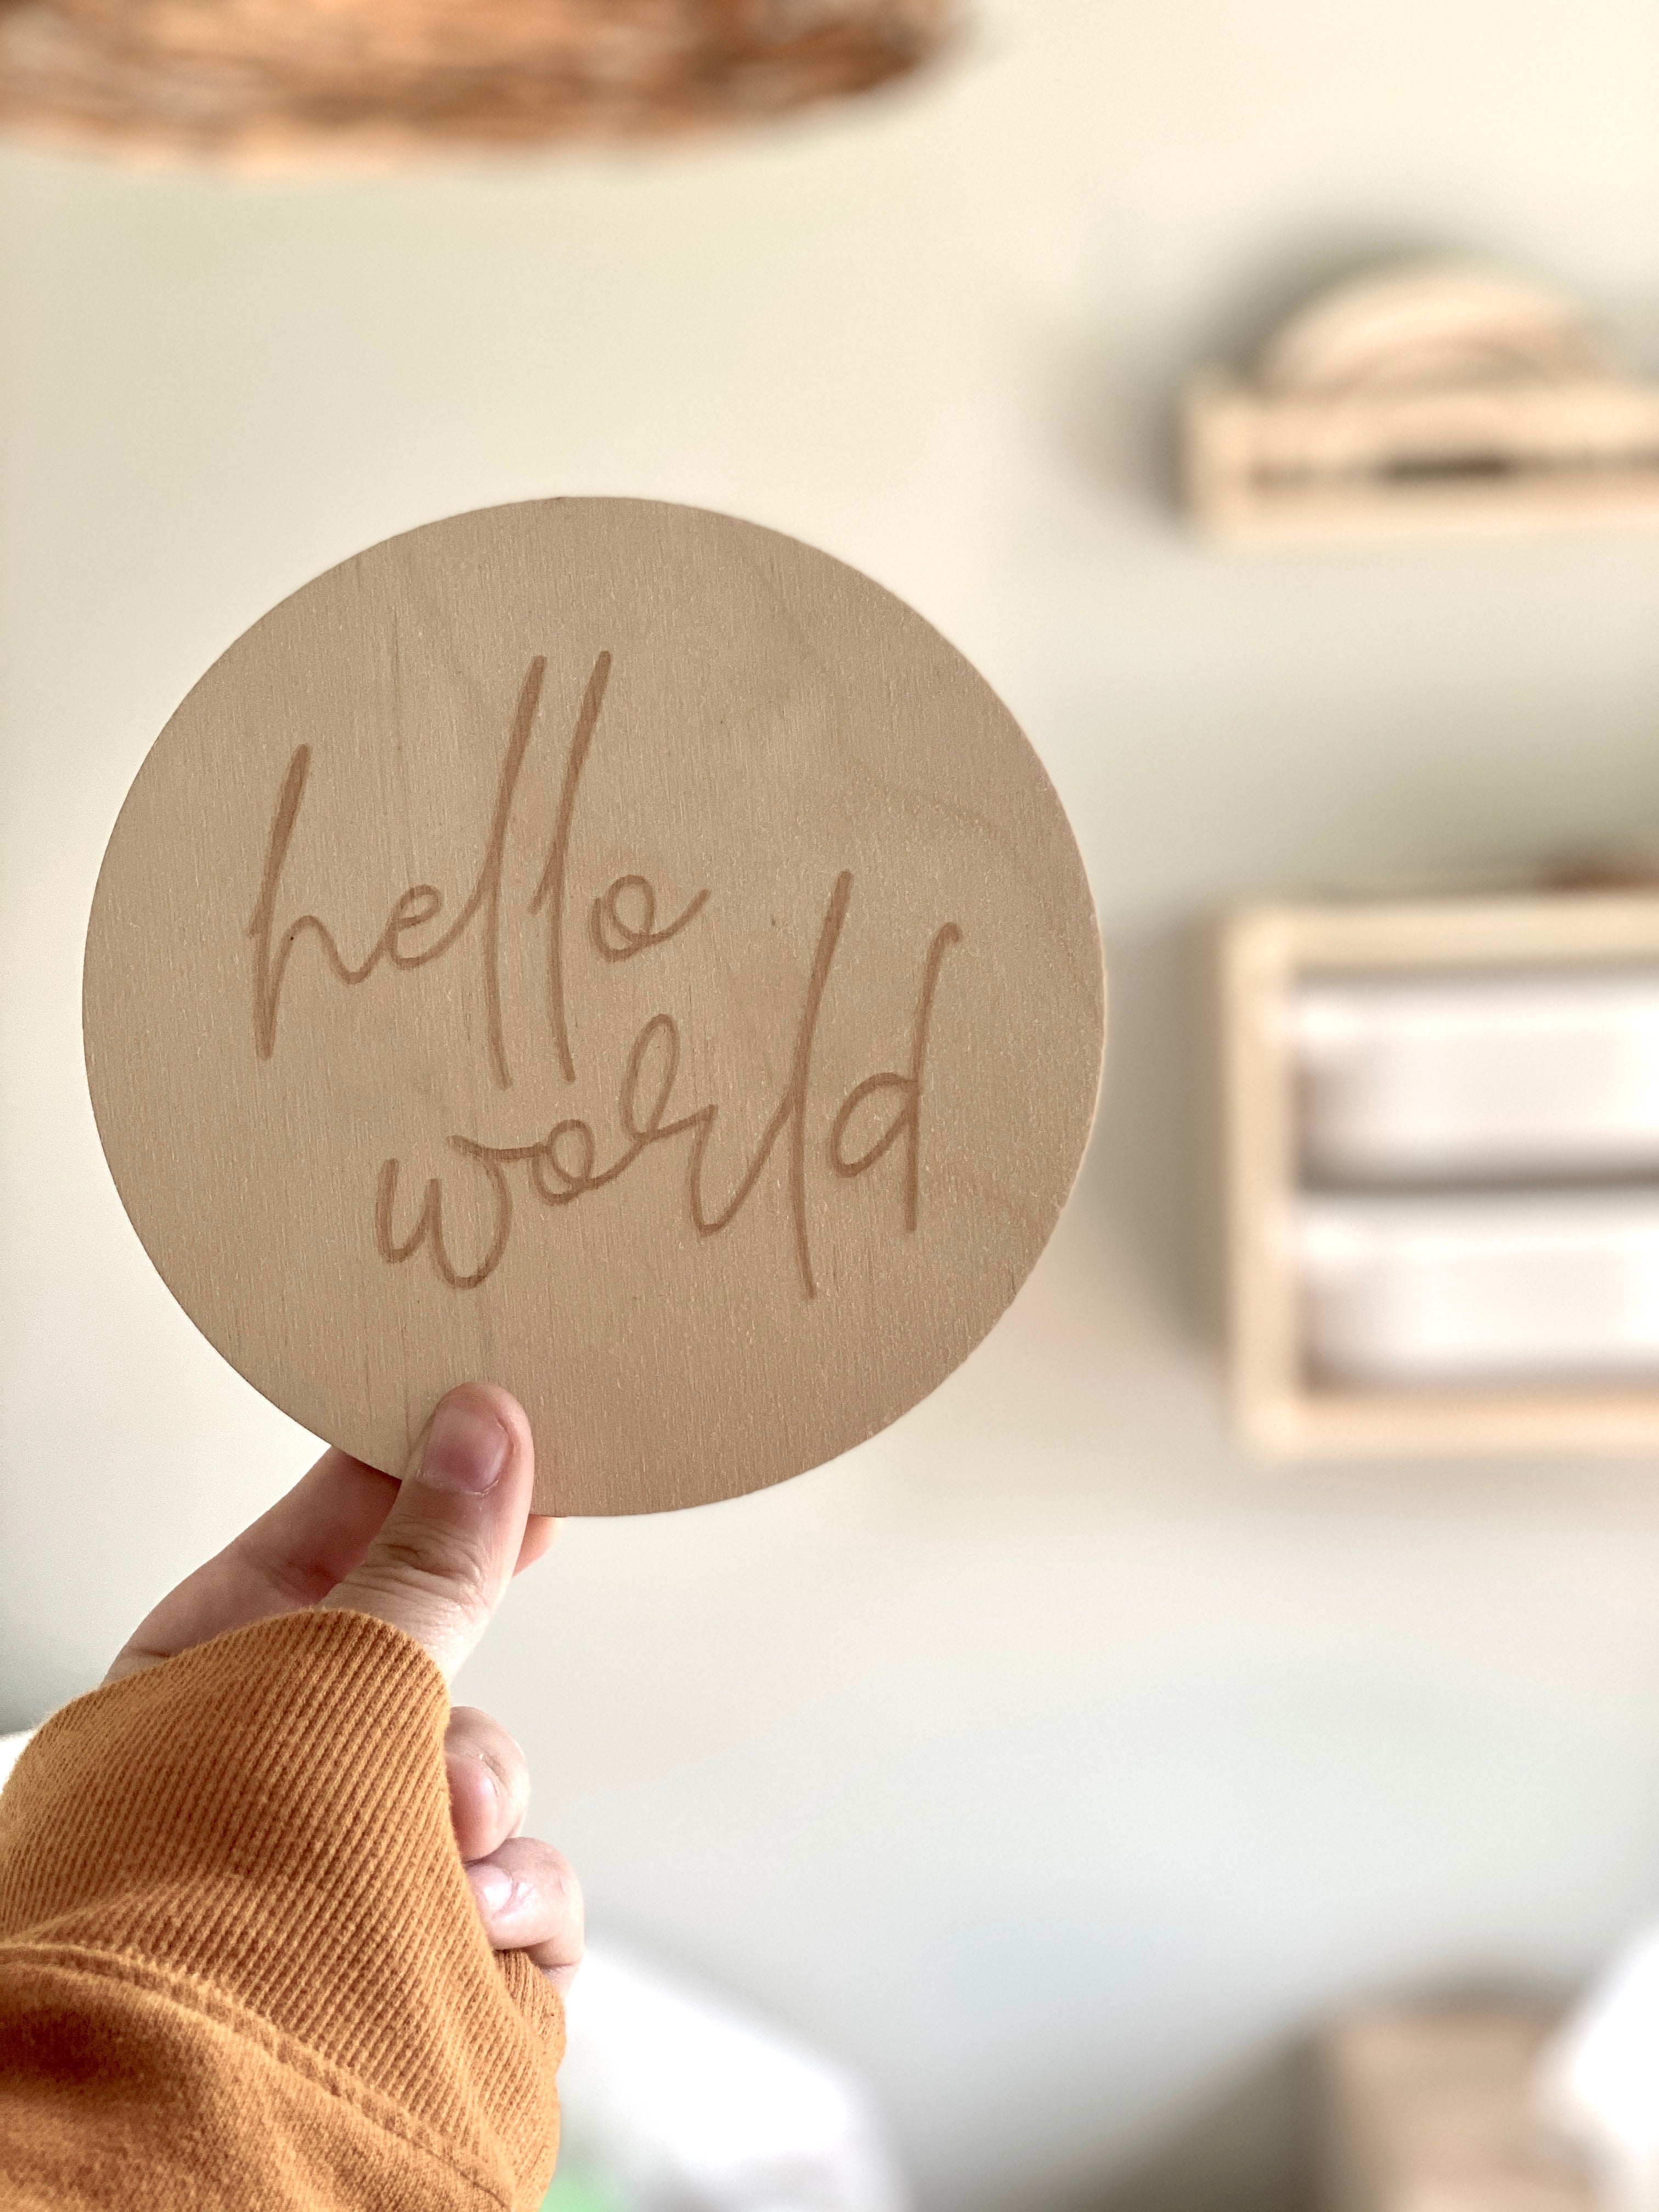 Hello World 6” disc